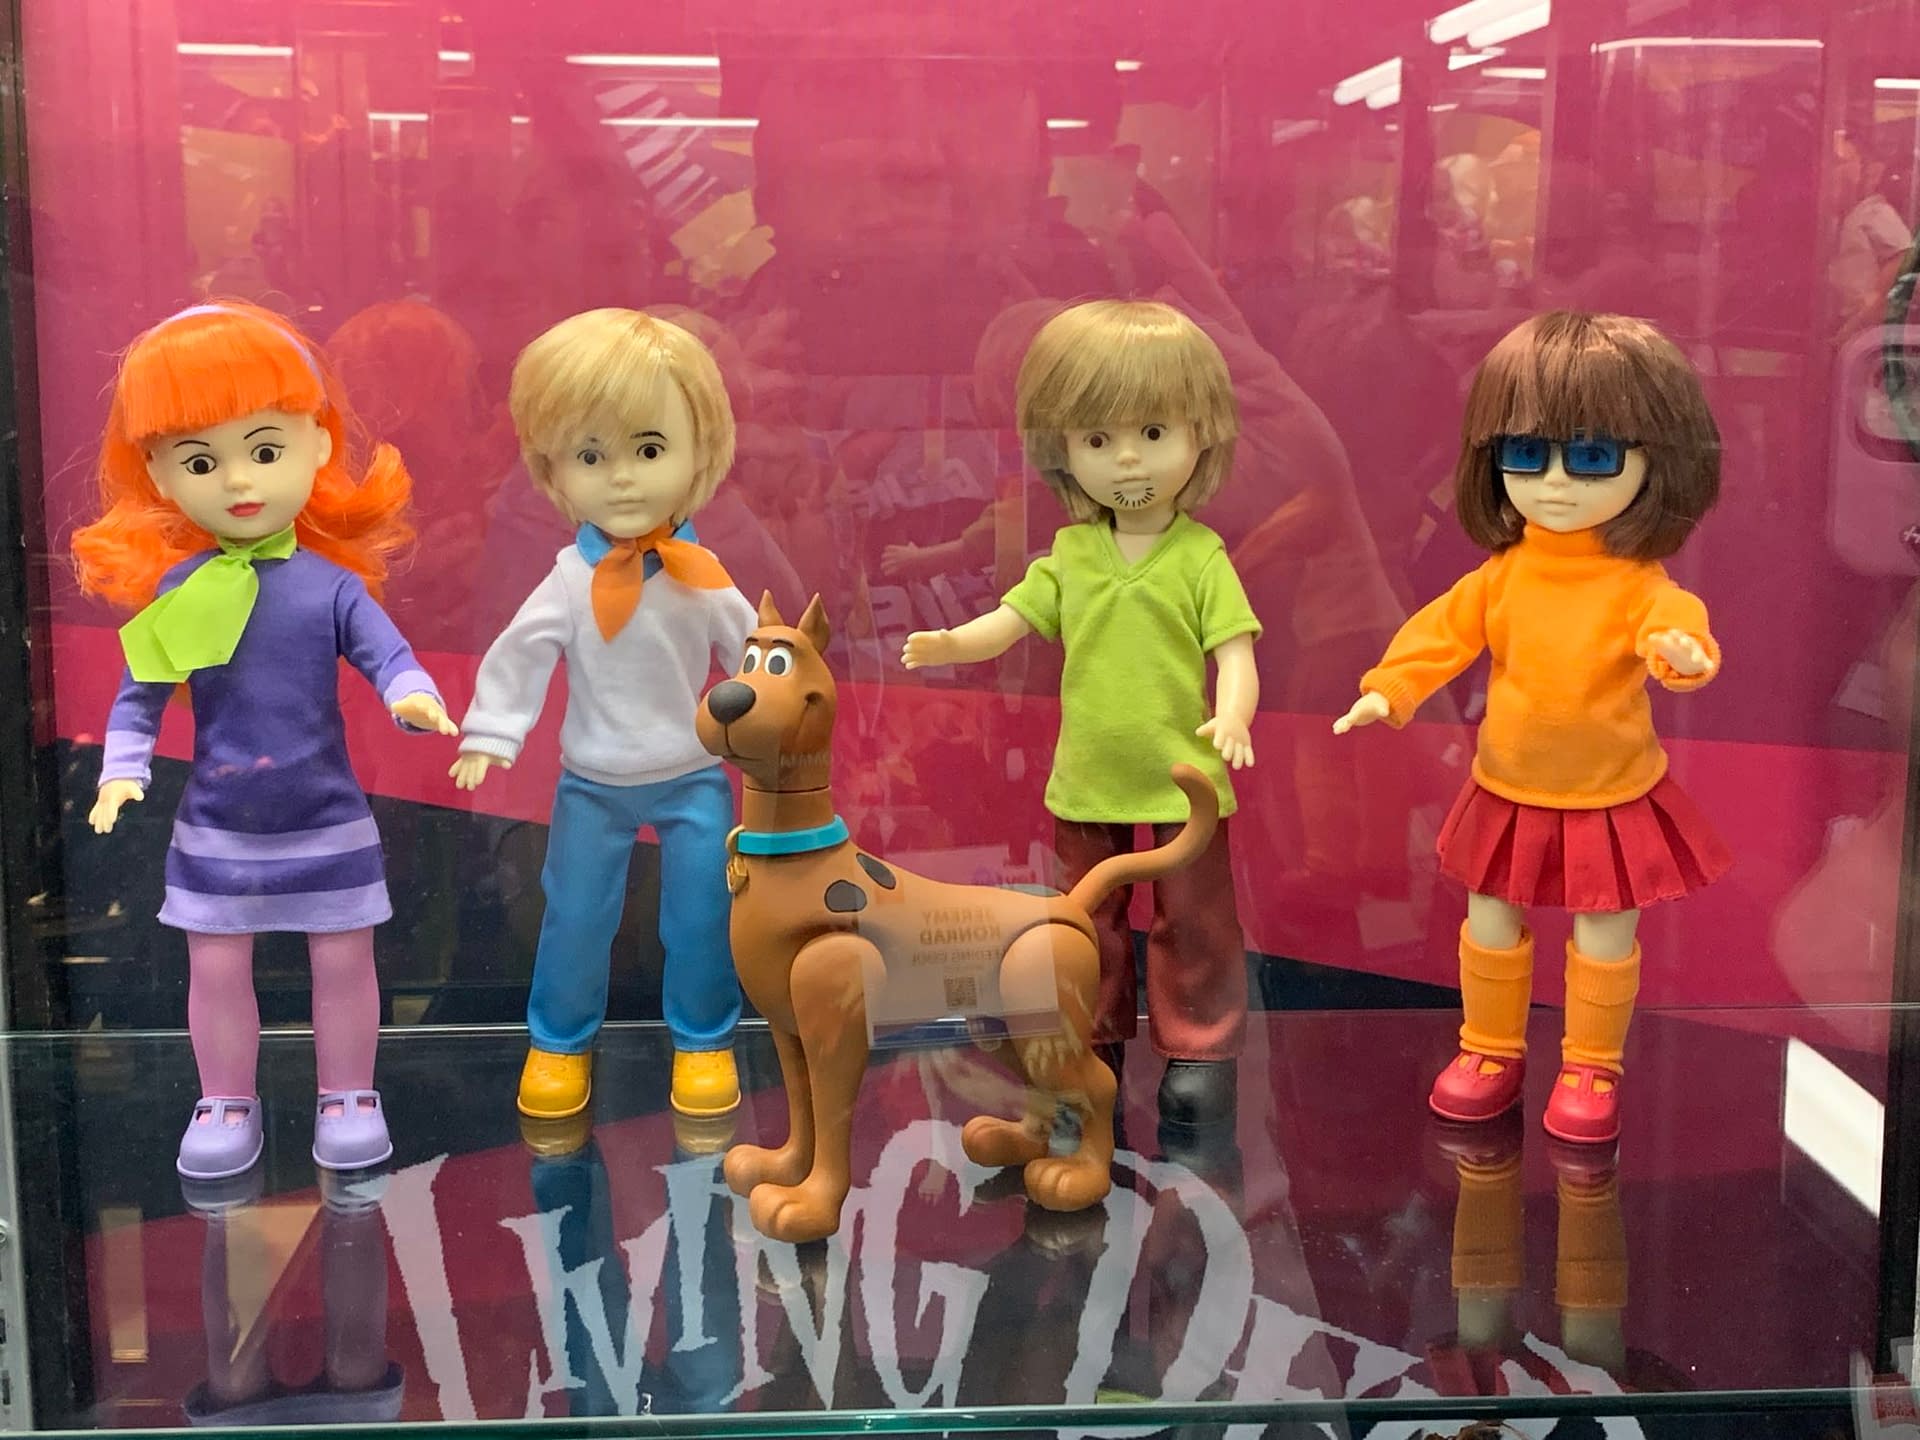 New York Toy Fair: 76 Photos From the Mezco Toyz Booth